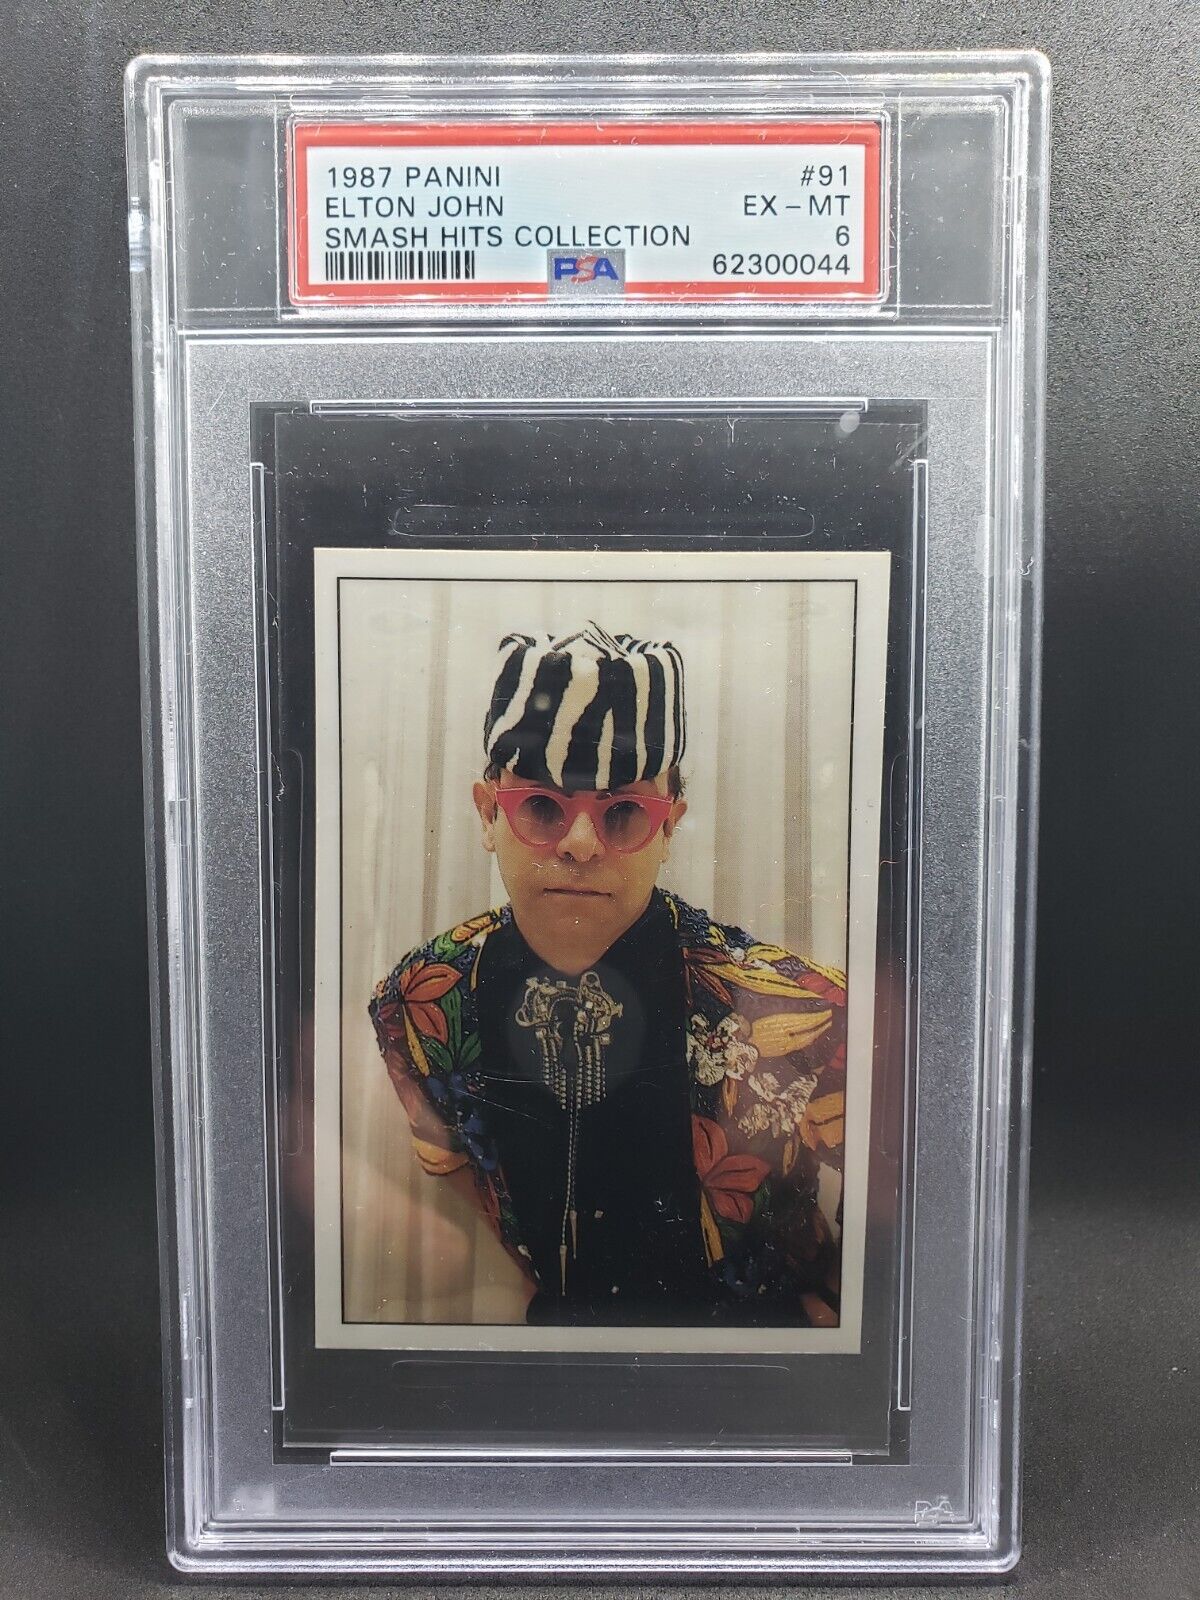 1987 Panini Elton John Smash Hits Collection #91 EX-MT PSA 6 - Oversized Card